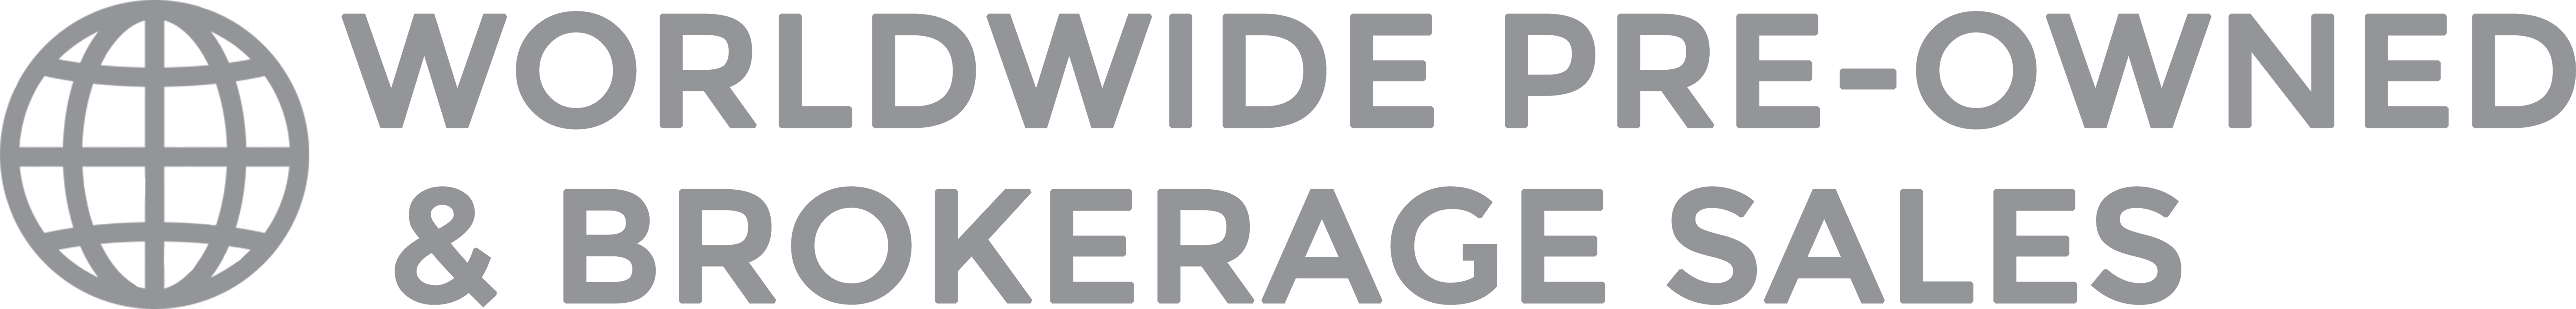 Worldwide-Brokerage-Logo